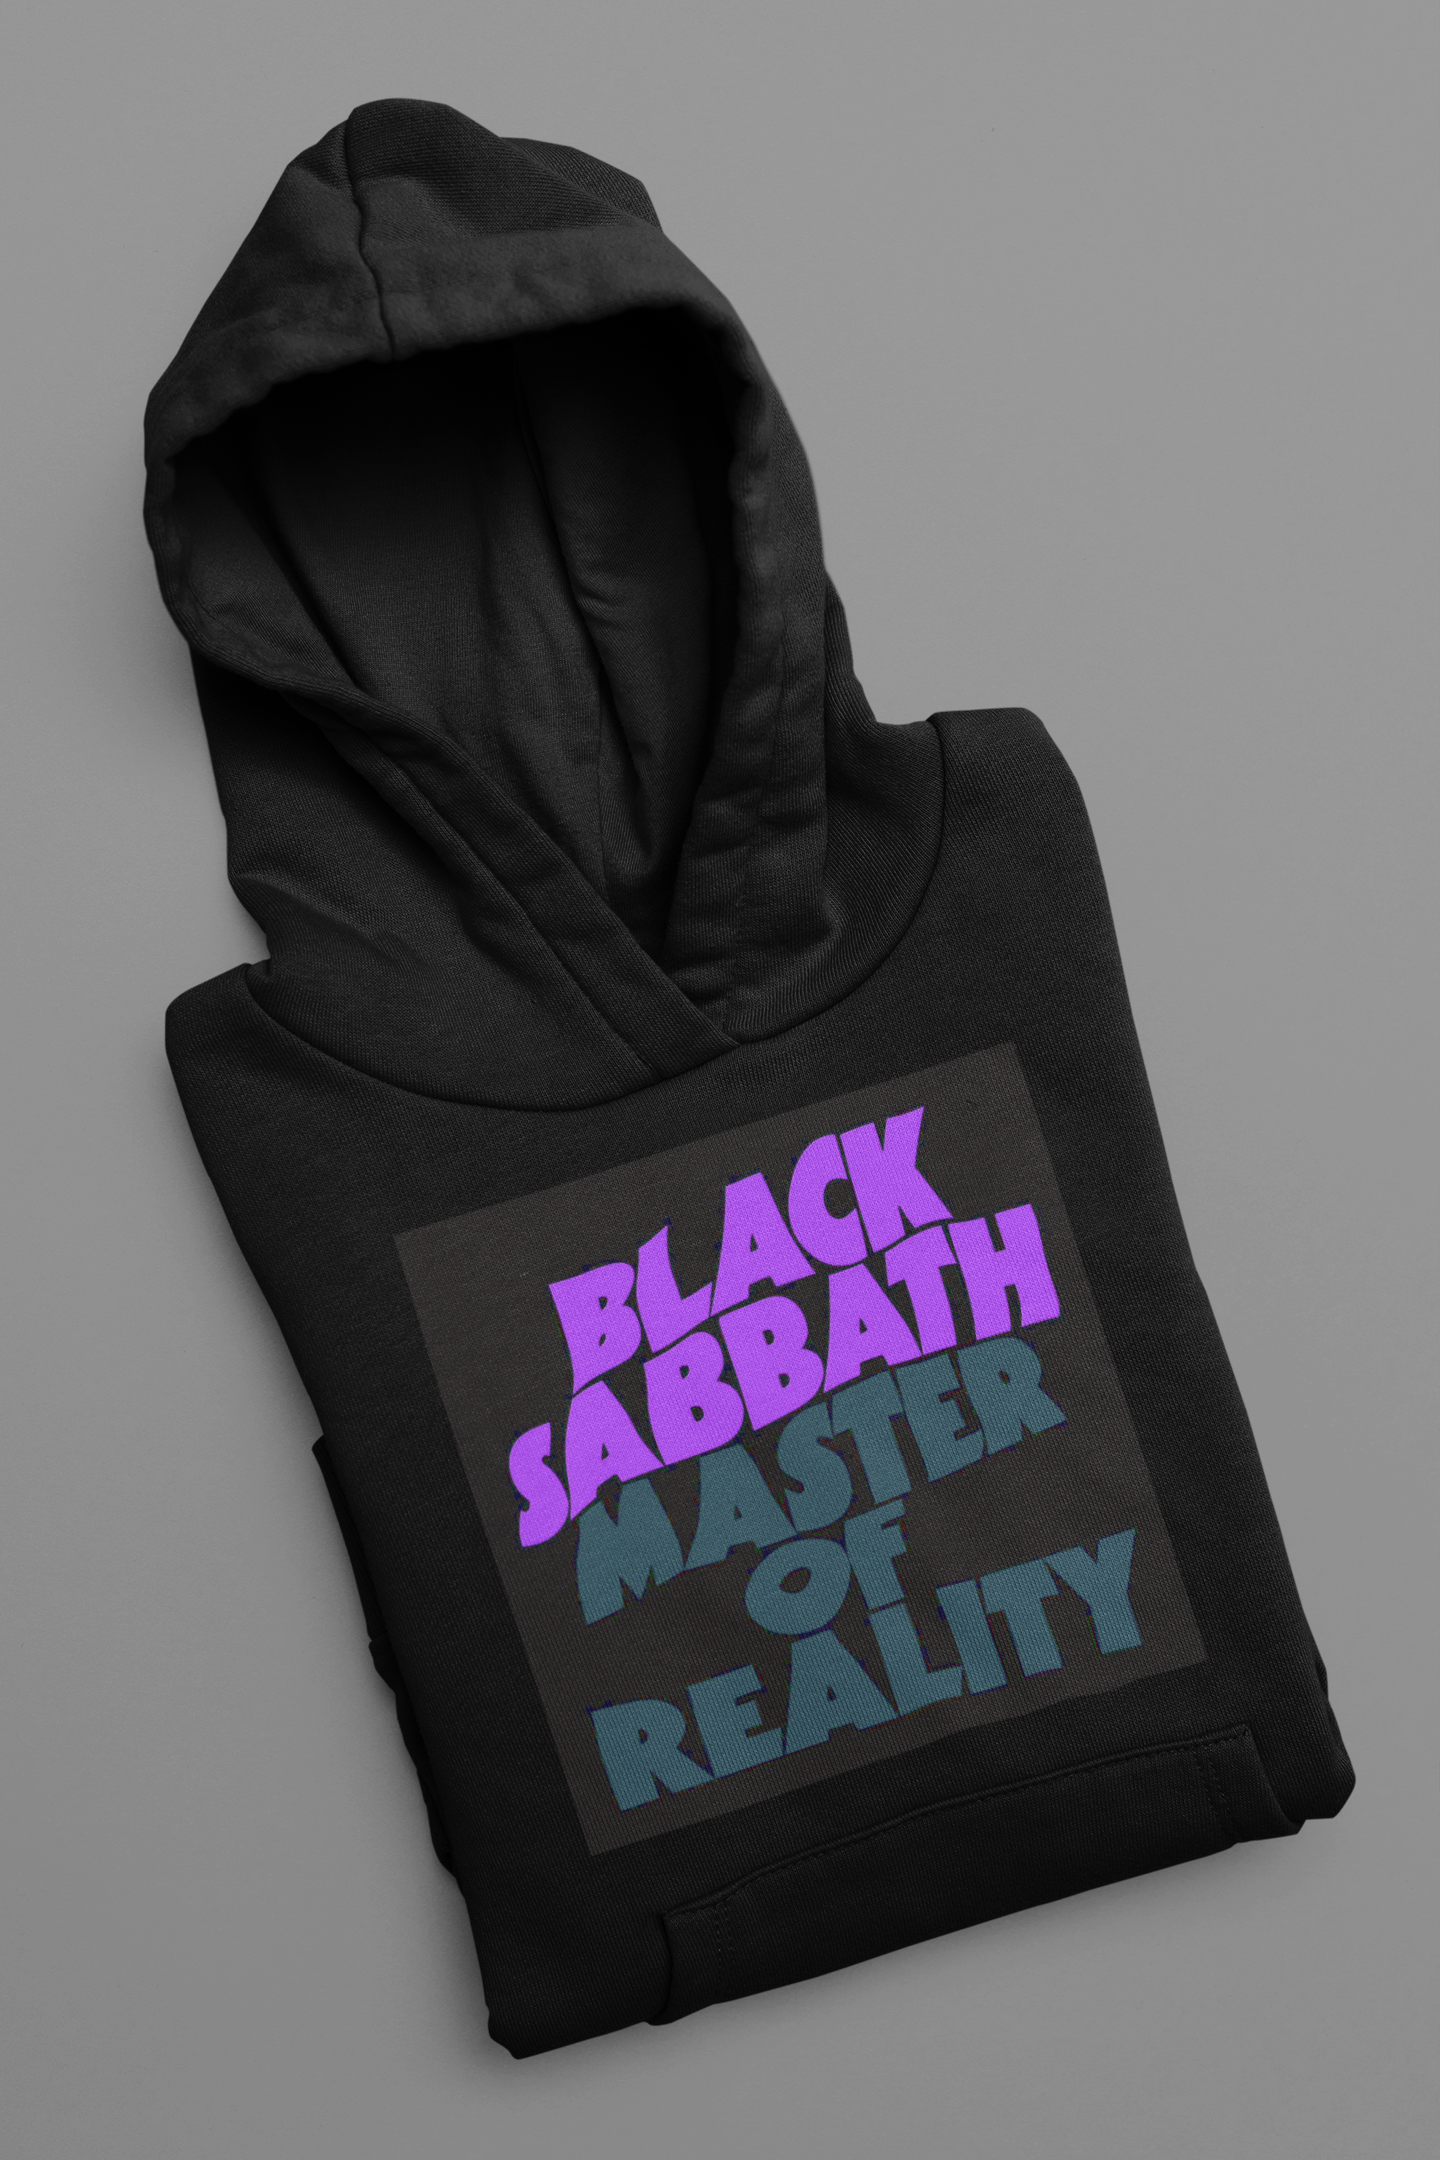 Moletom "Master of Reality - Black Sabbath" - Álbum - Música